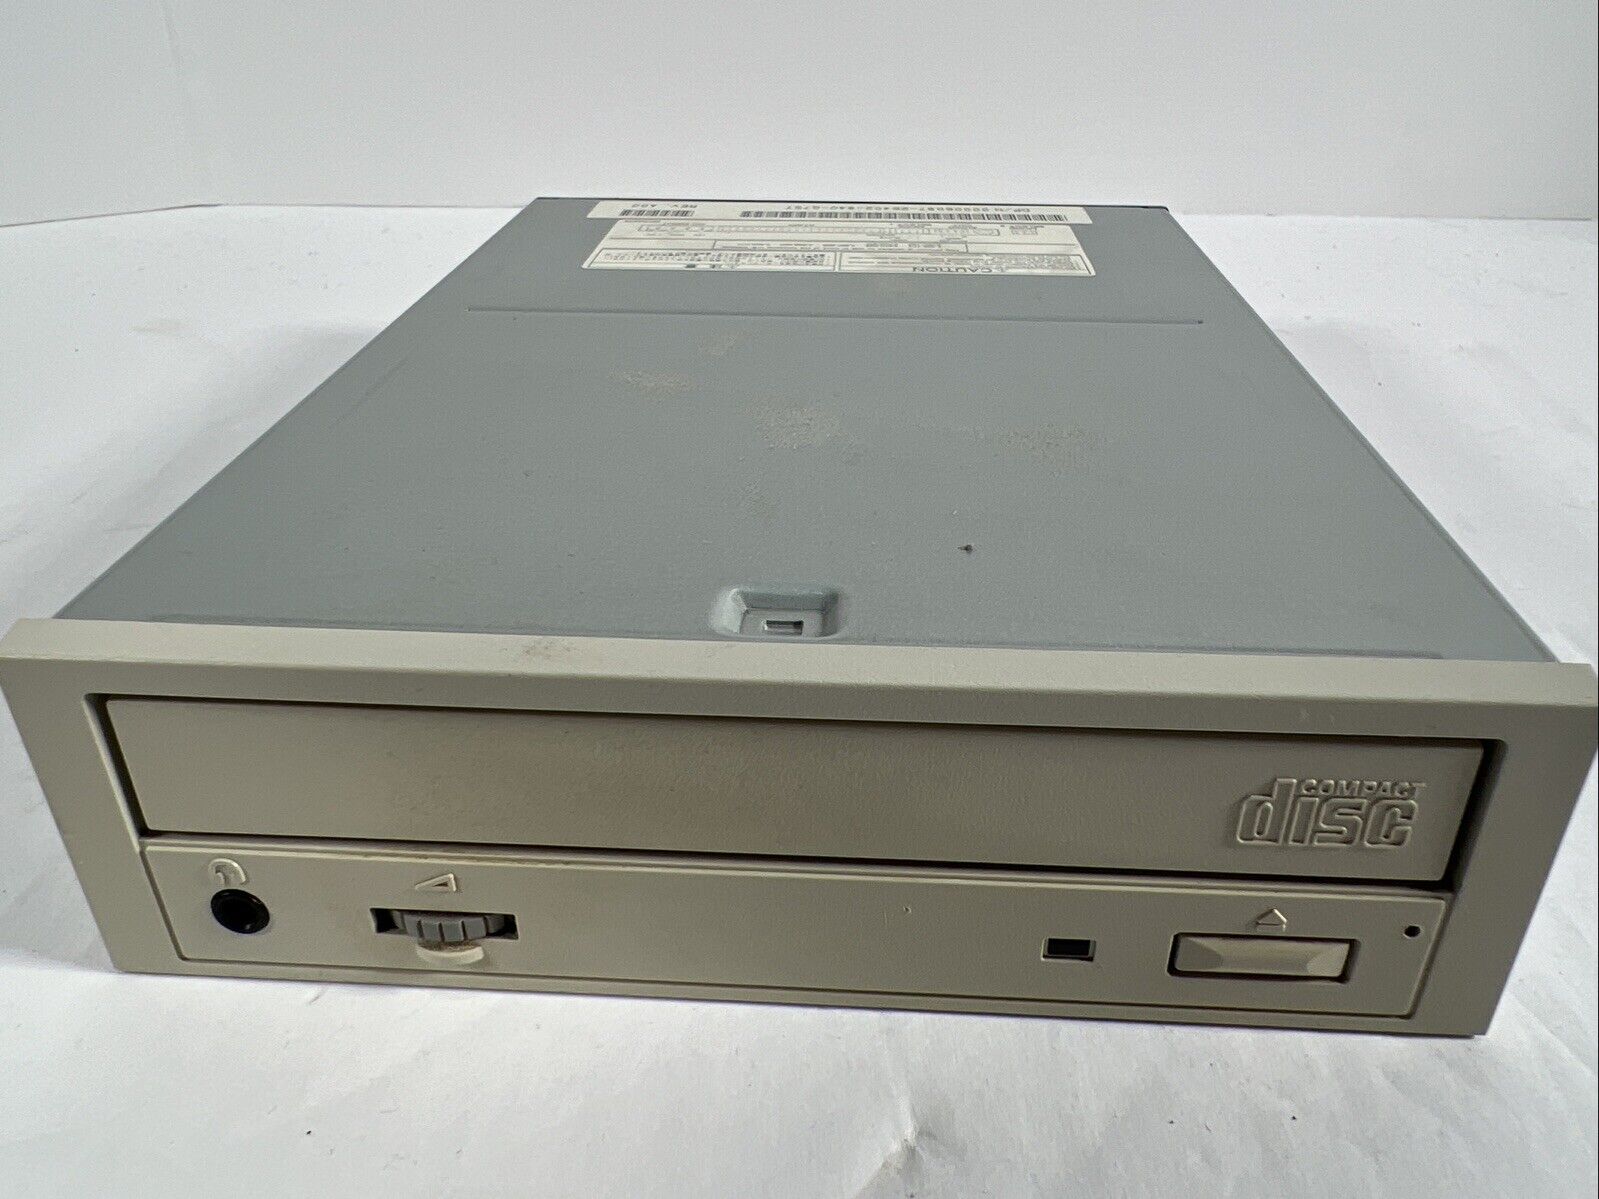 Toshiba Dell 06087 32x IDE ATAPI CD-ROM Drive 1998 XM-6202B Untested Vintage